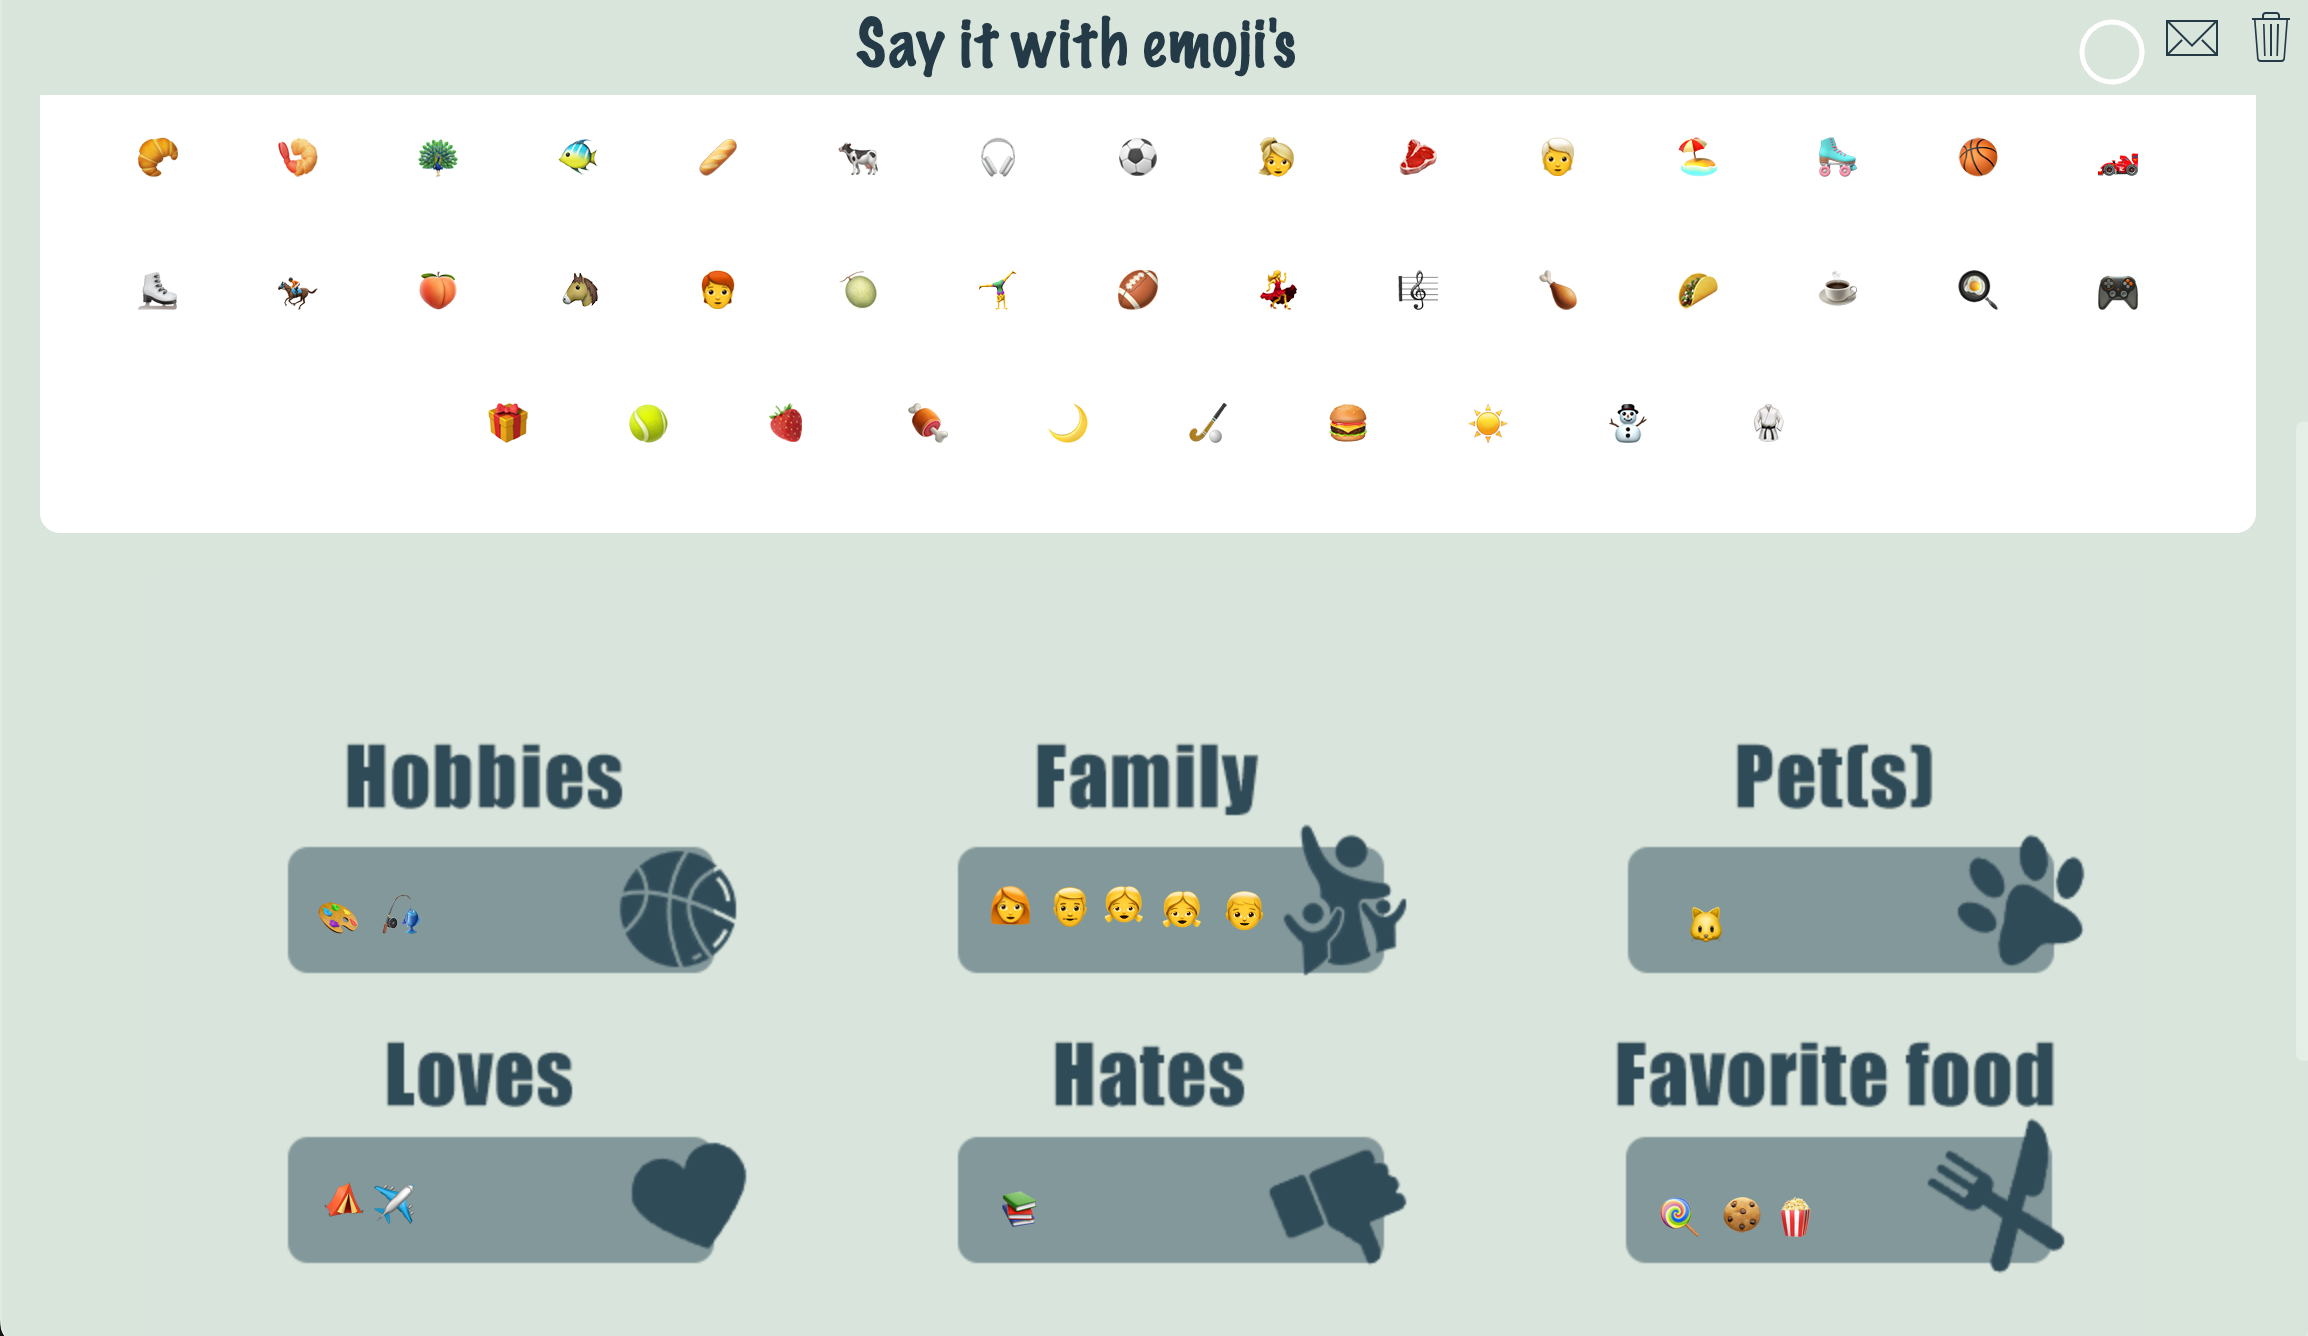 Emoji introduction lesson plan